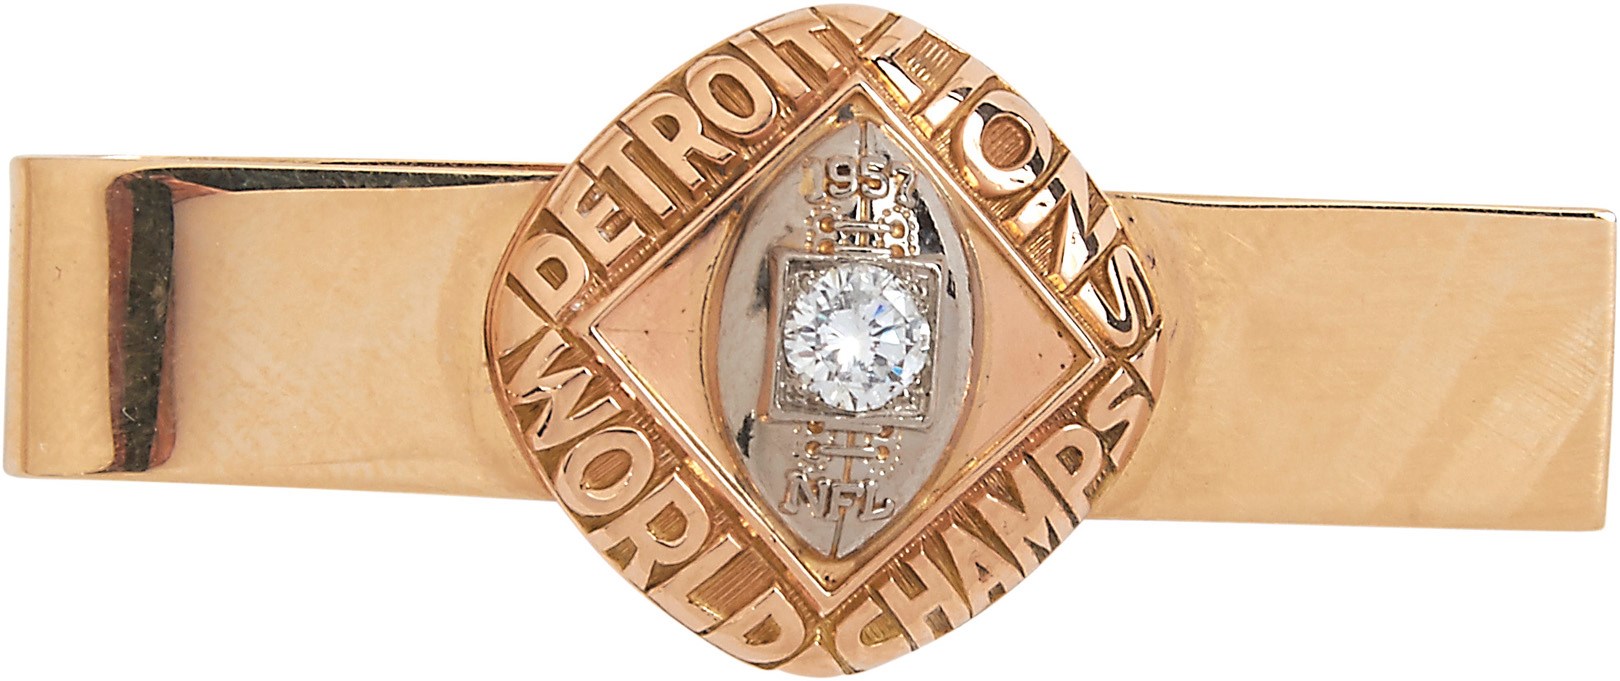 1957 Detroit Lions World Championship Tie-Bar